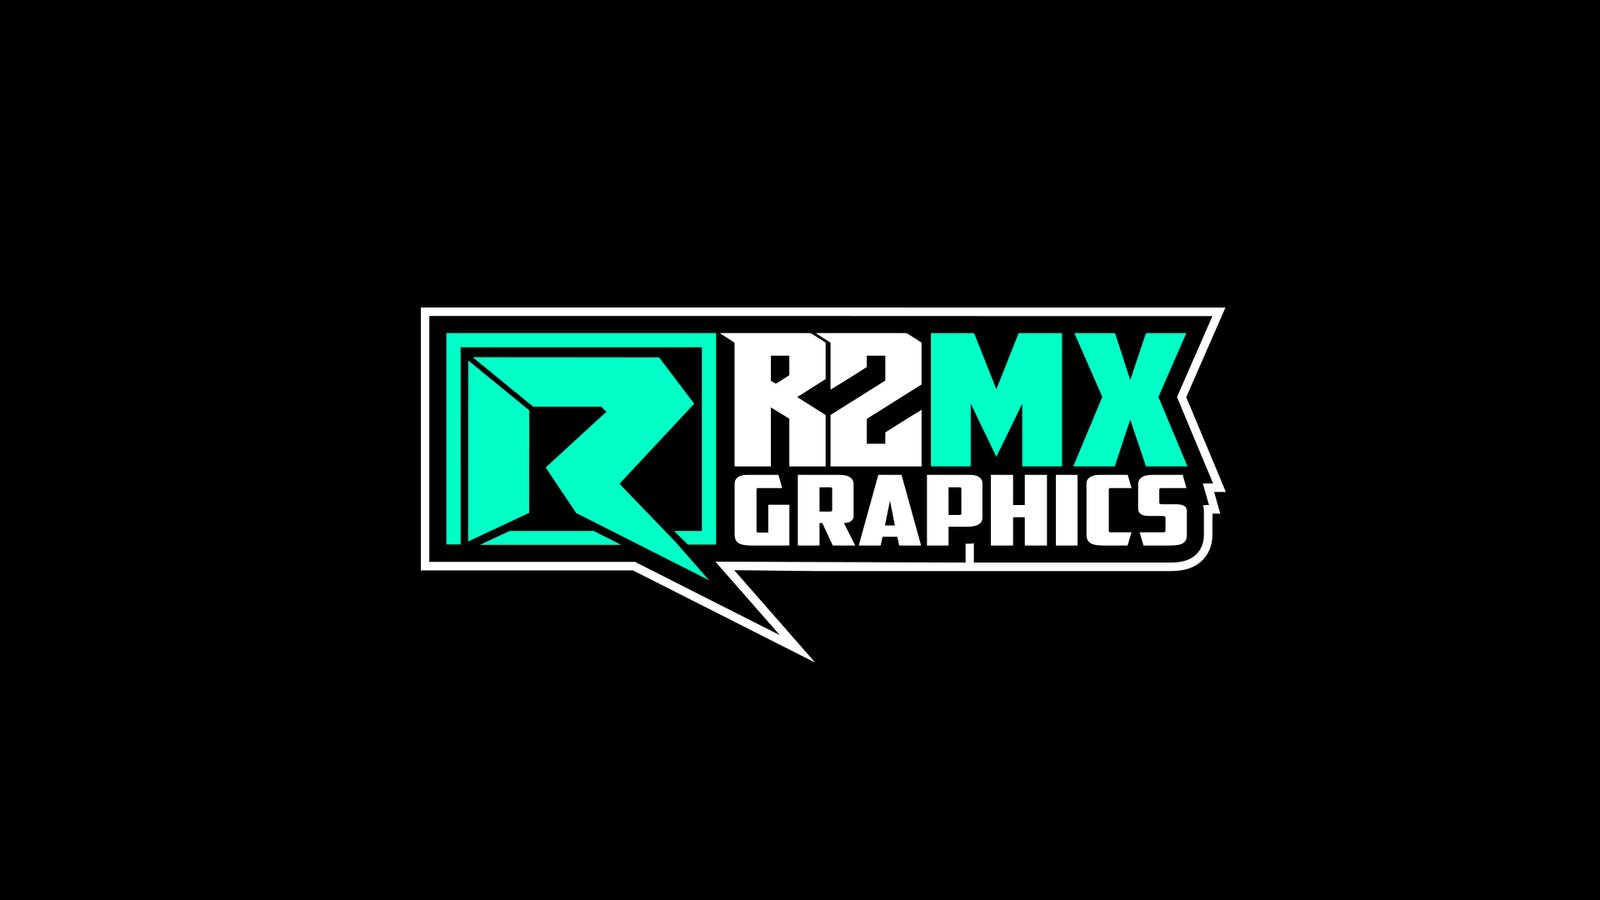 Rk logo Black and White Stock Photos & Images - Alamy